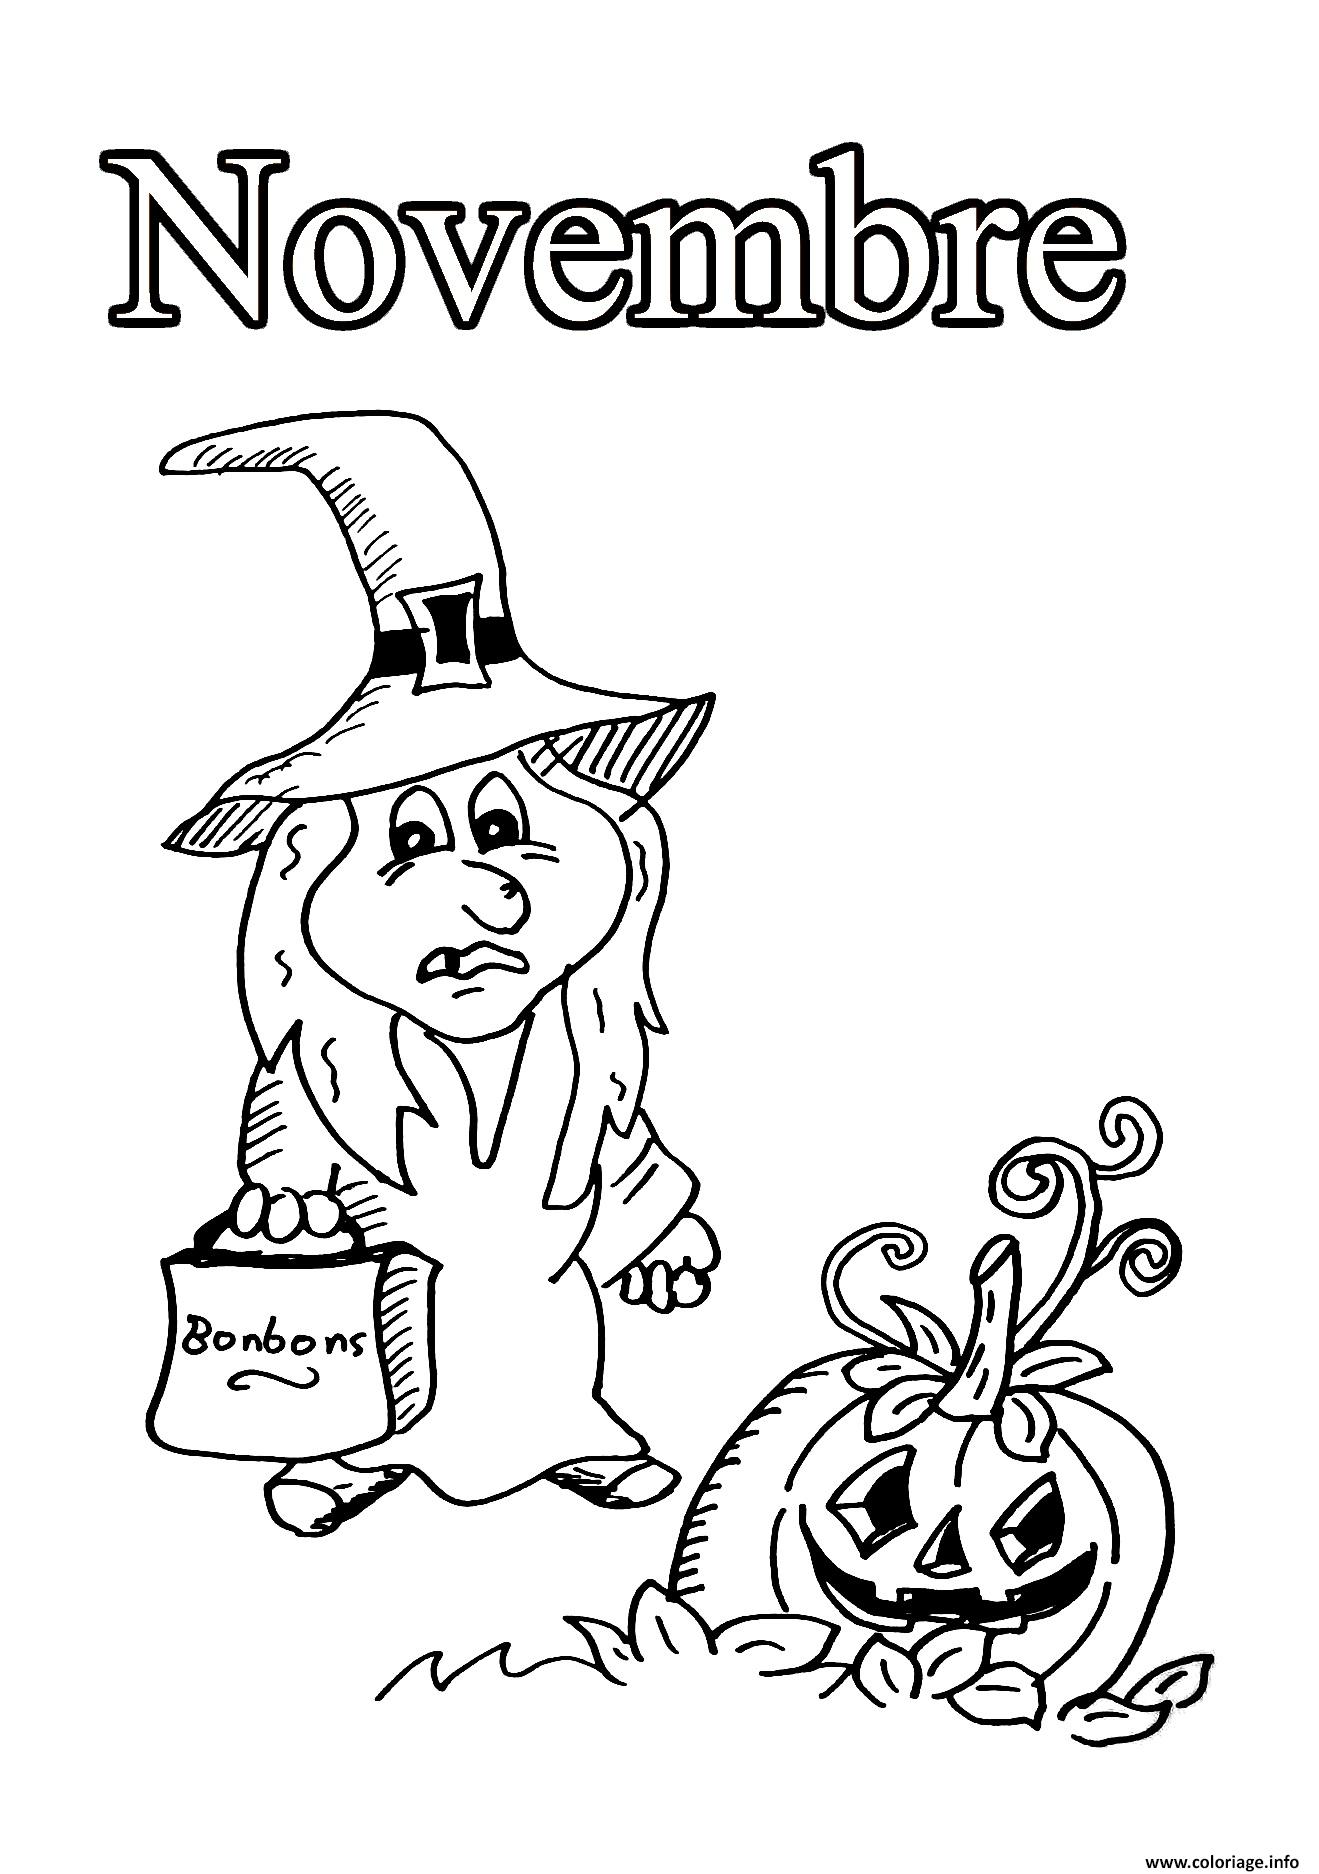 Coloriage Novembre Fini Halloween Dessin à Imprimer